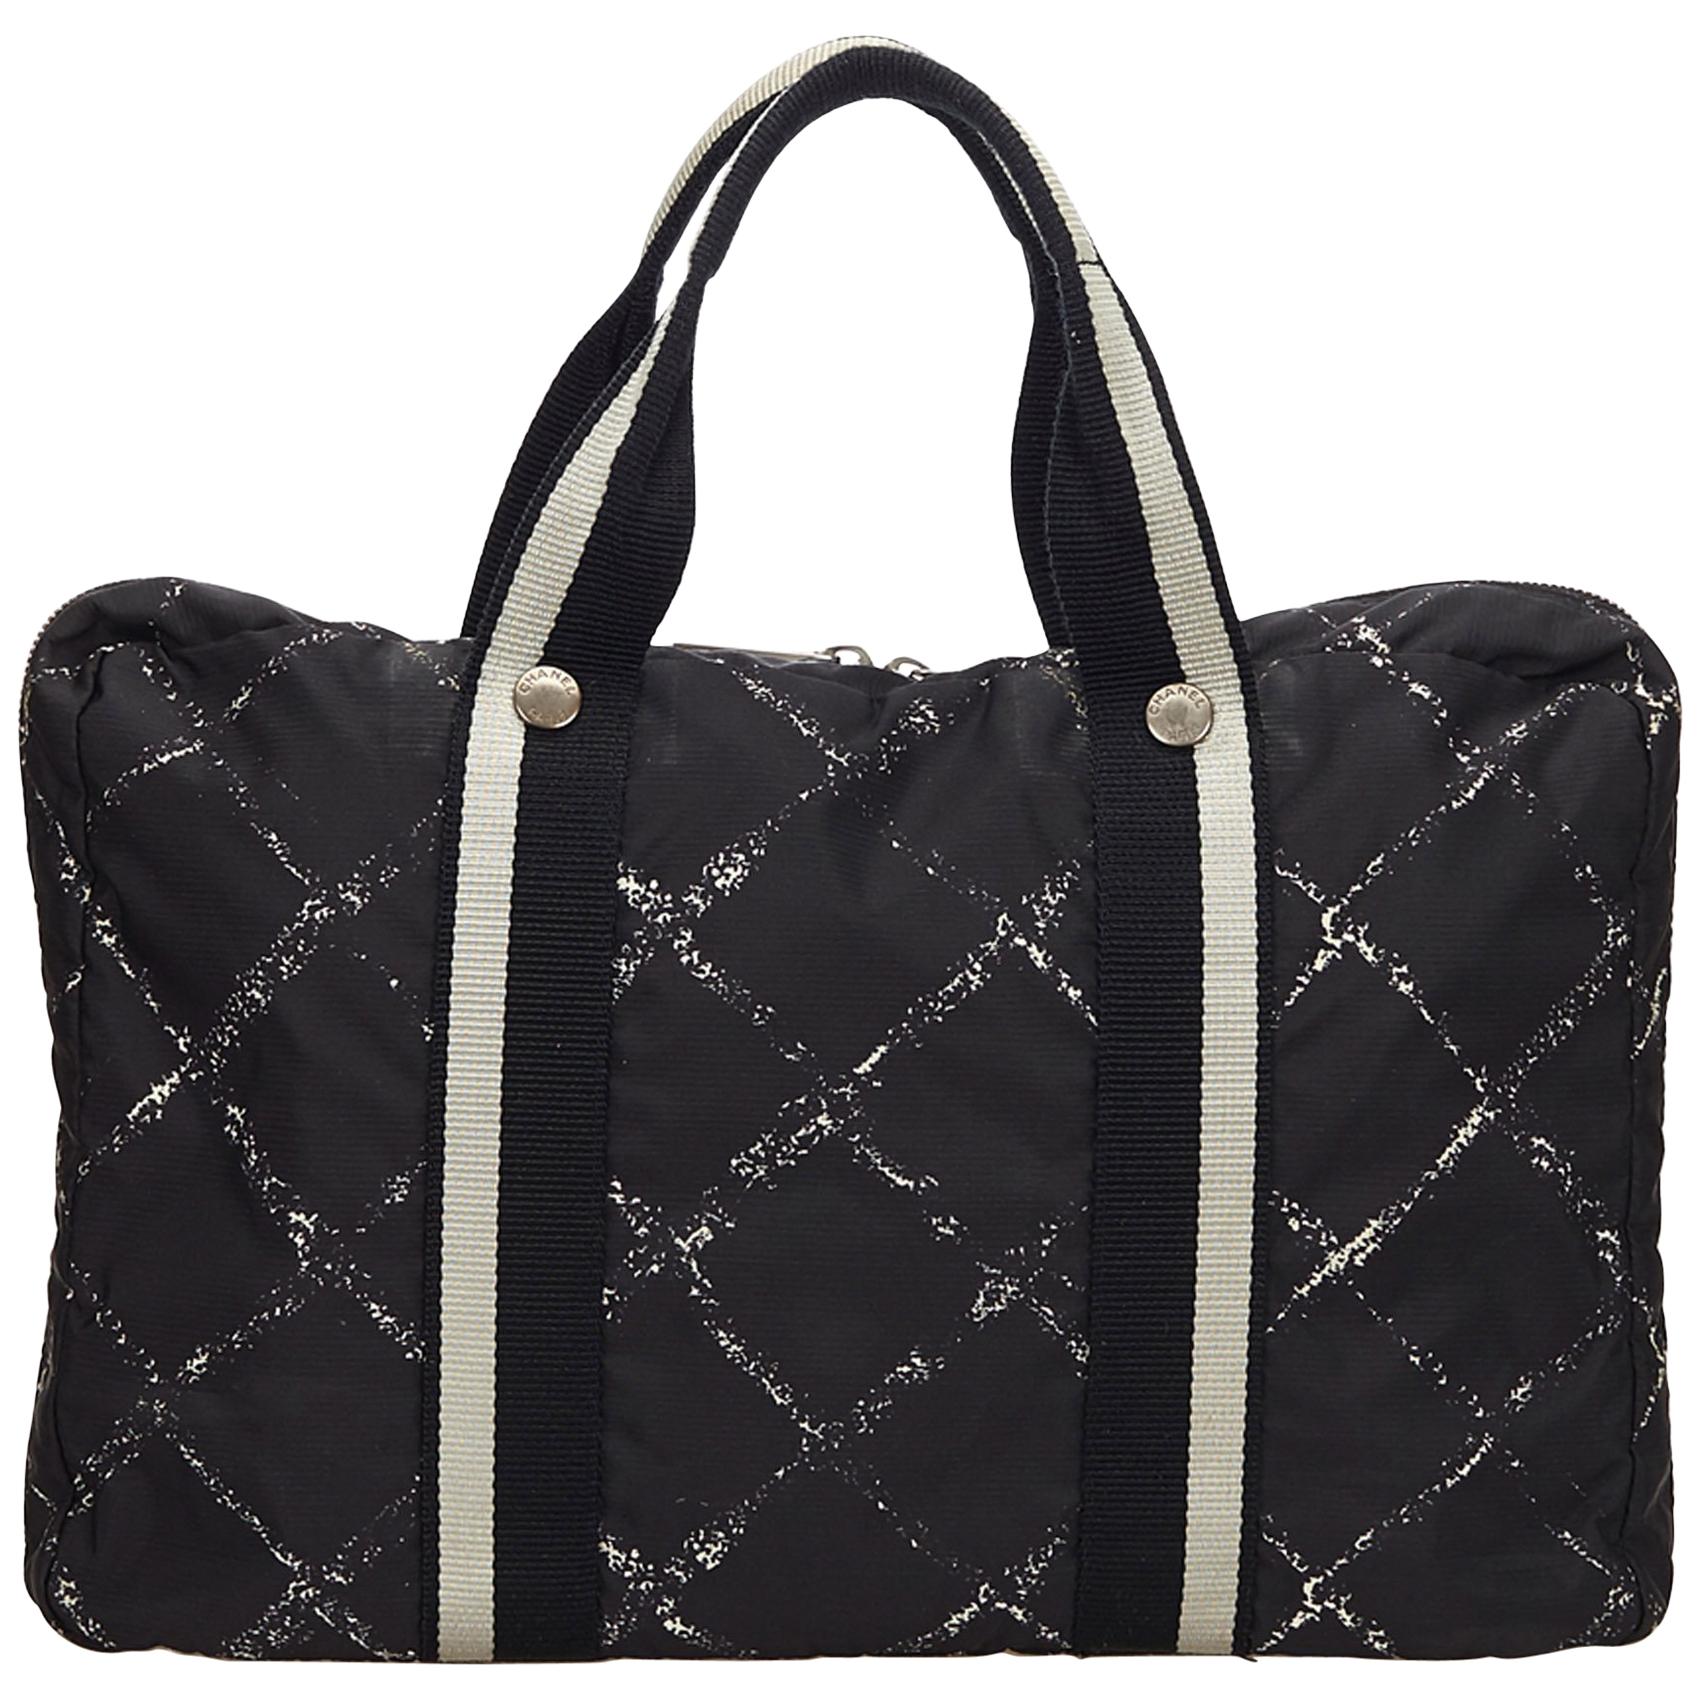 Chanel Black and White Old Travel Line Handbag For Sale